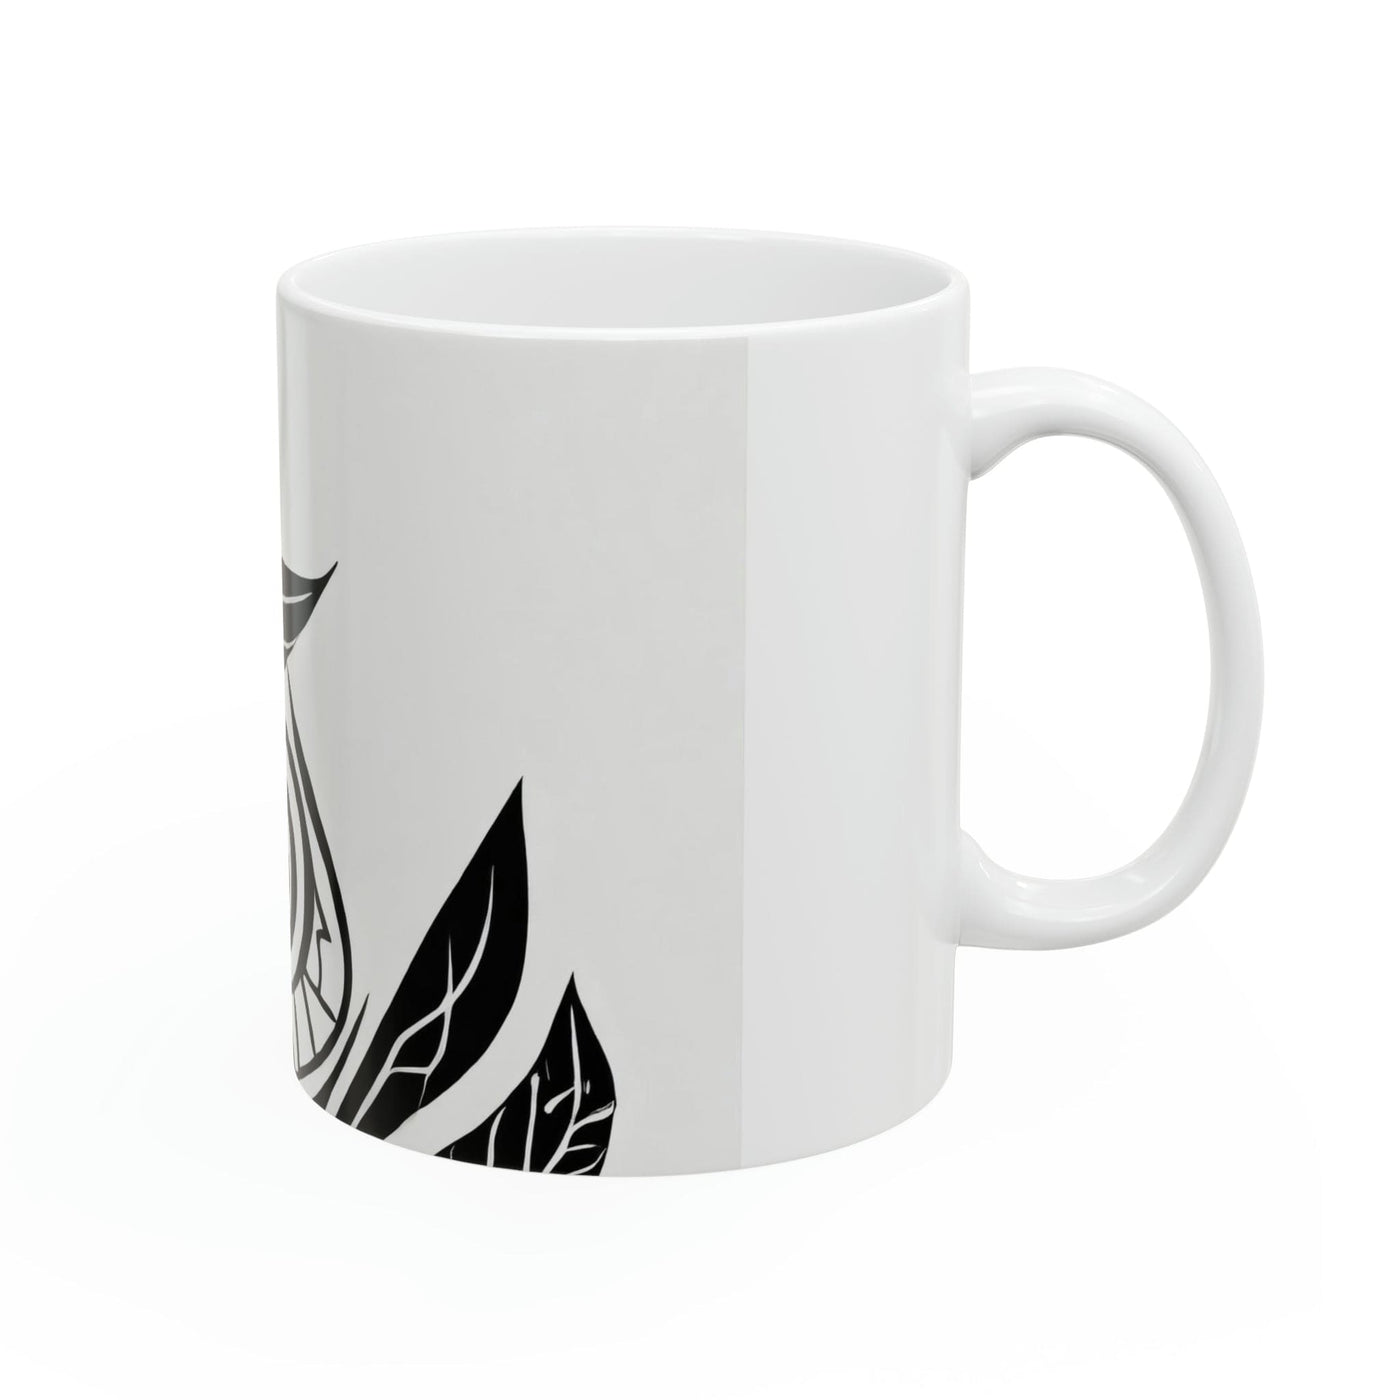 Ceramic Mug 15oz Floral Black Line Art Print 54615 - Decorative | Mugs 11oz